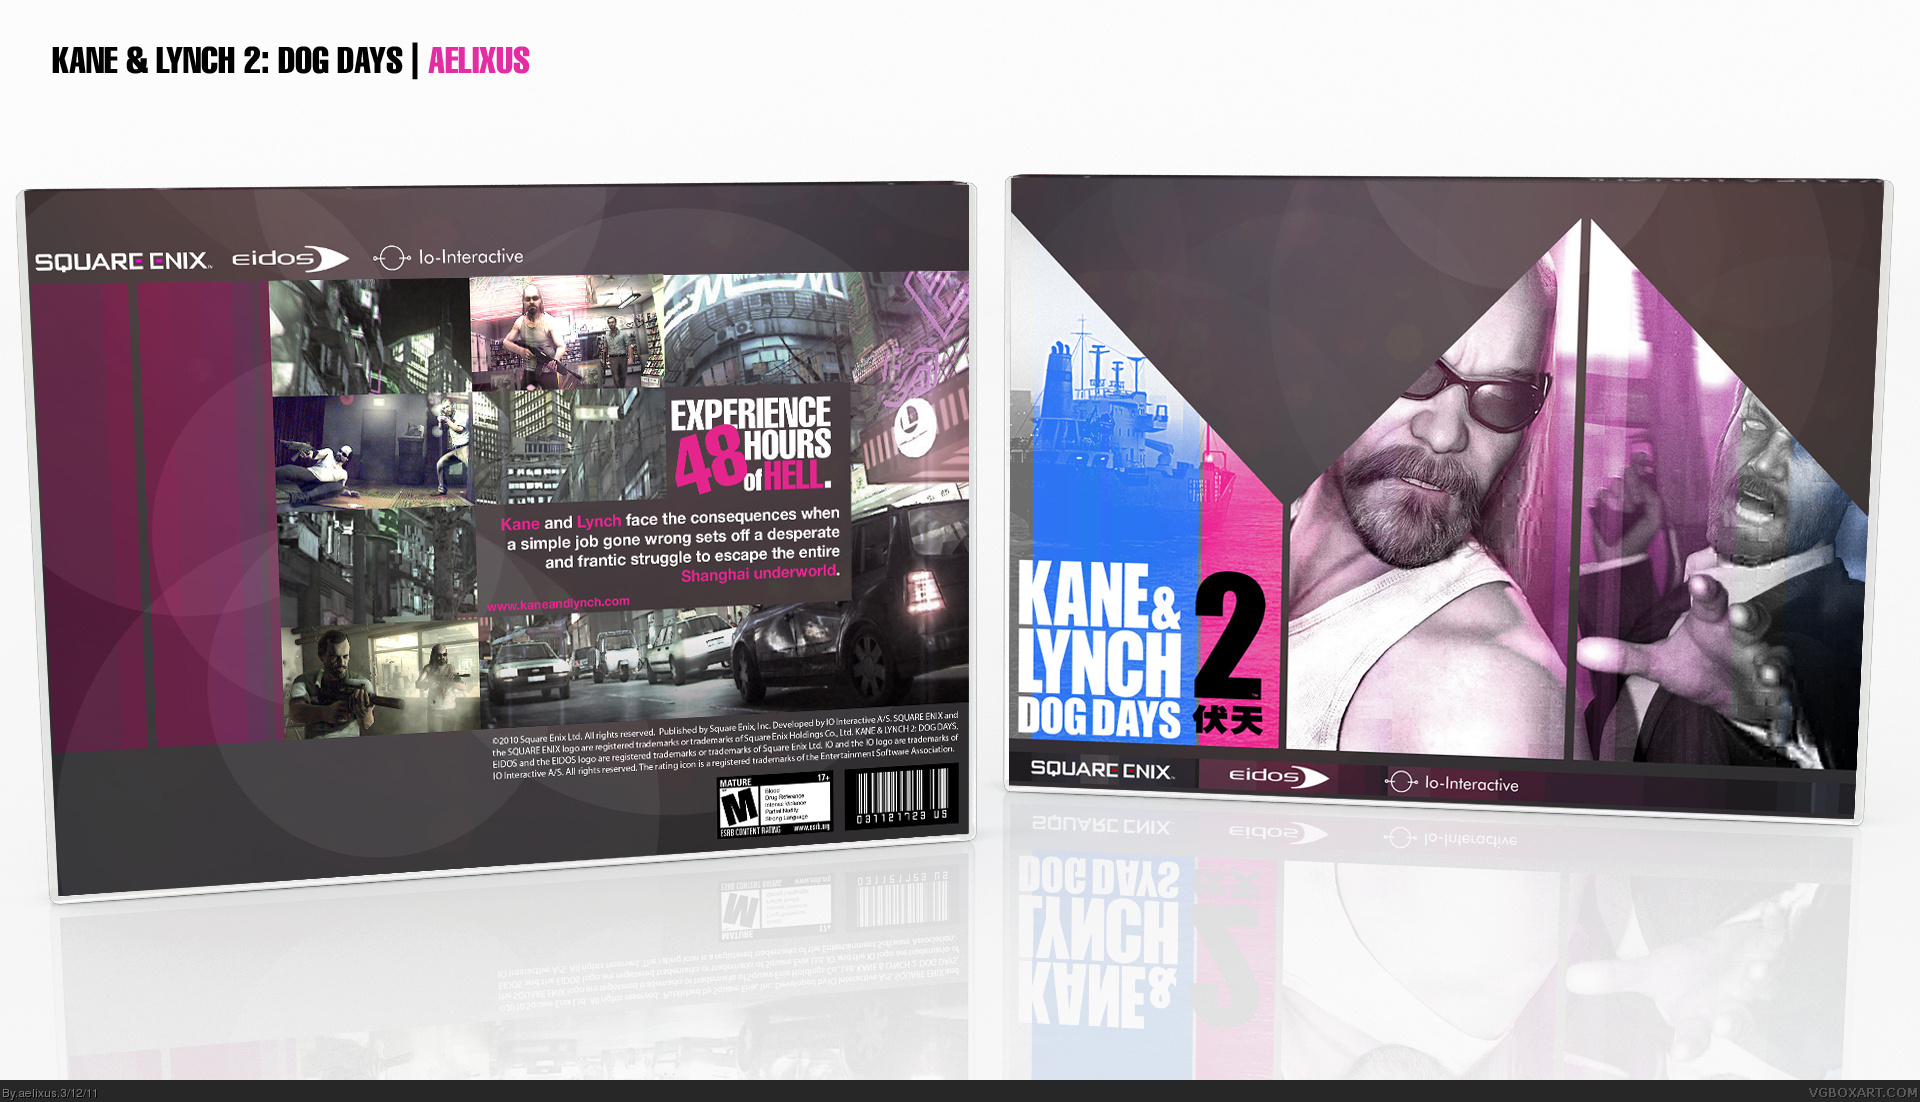 Kane & Lynch 2: Dog Days box cover